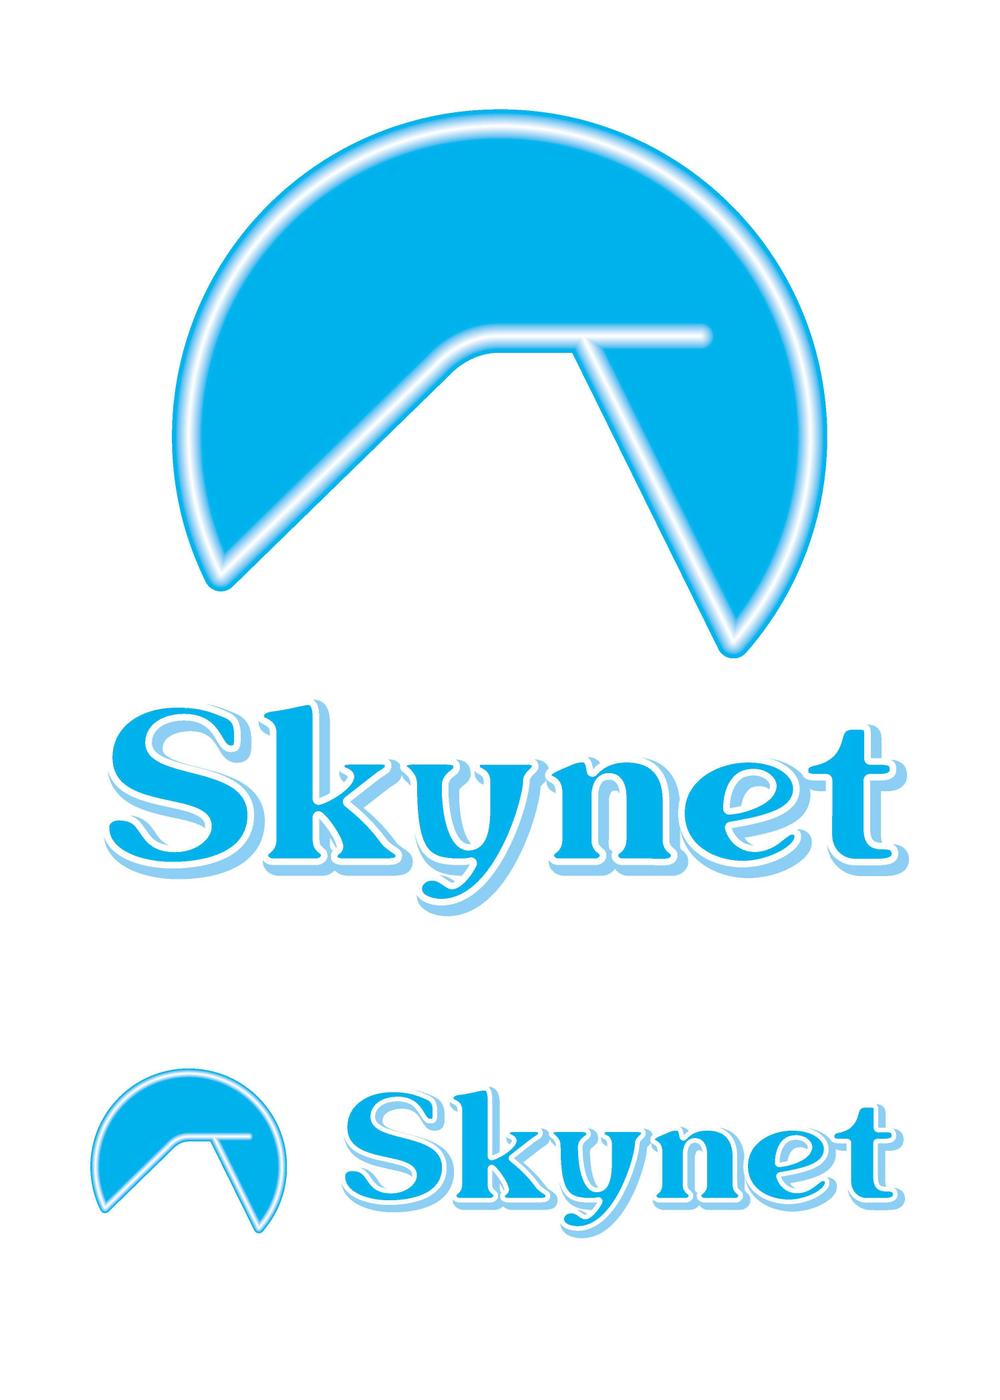 Skynet_04提案A.jpg